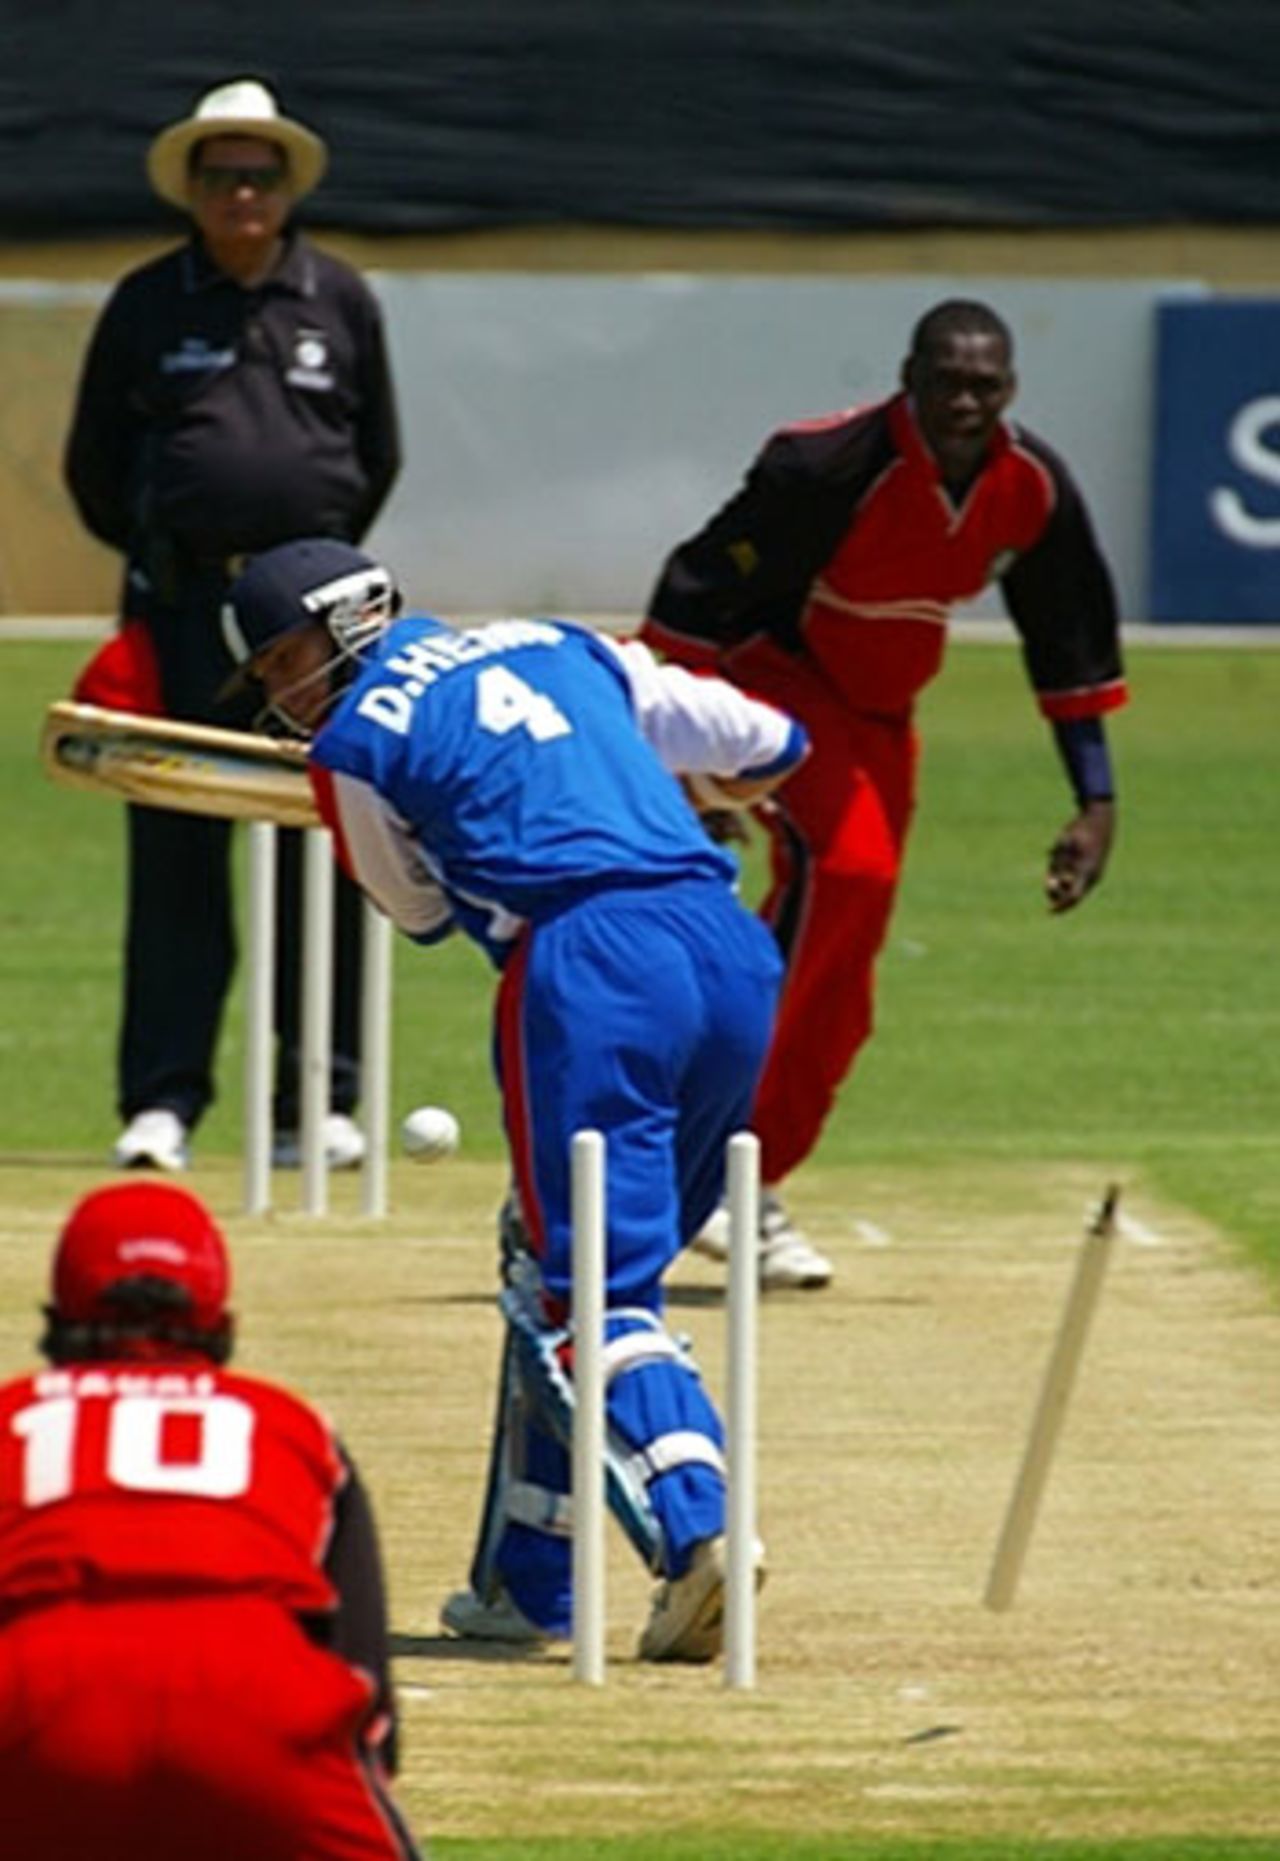 David Hemp is bowled by Henry Osinde, Bermuda v Canada, 4th match, ICC Tri-Series, Benoni, November 30, 2006